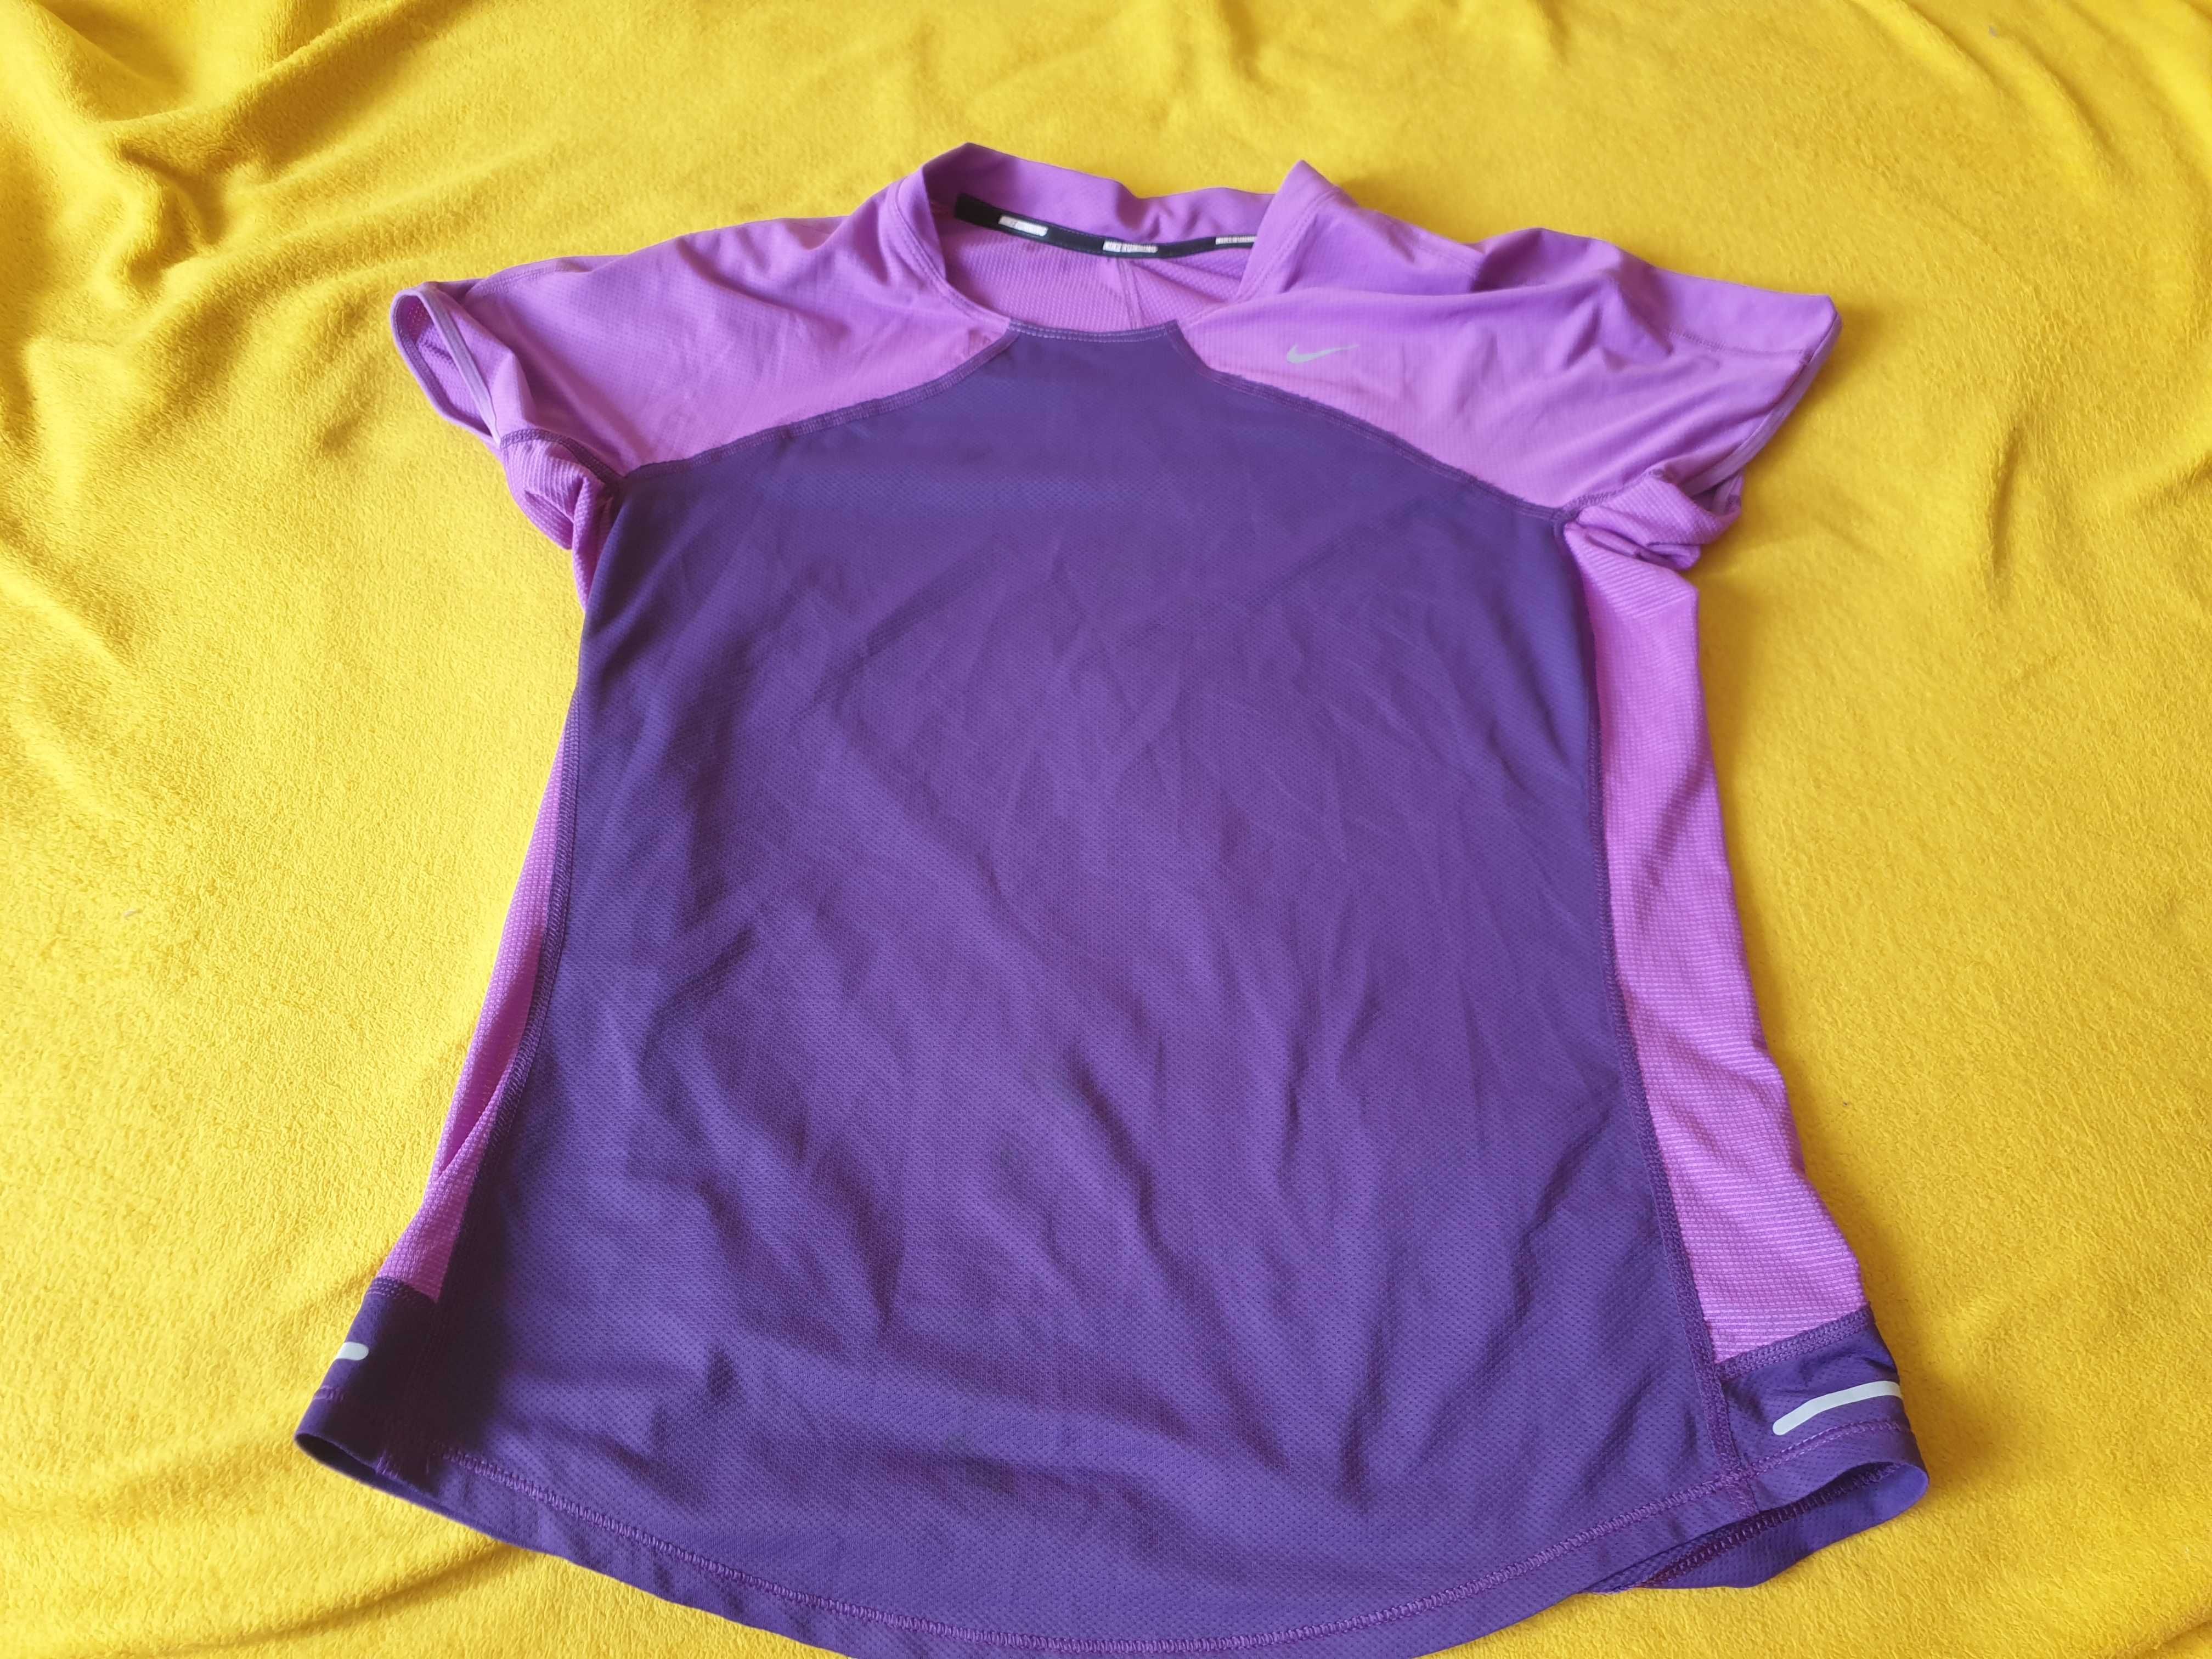 koszulka Nike termo  Dri fit do biegania koszulki  rózne rozmiary: L,M